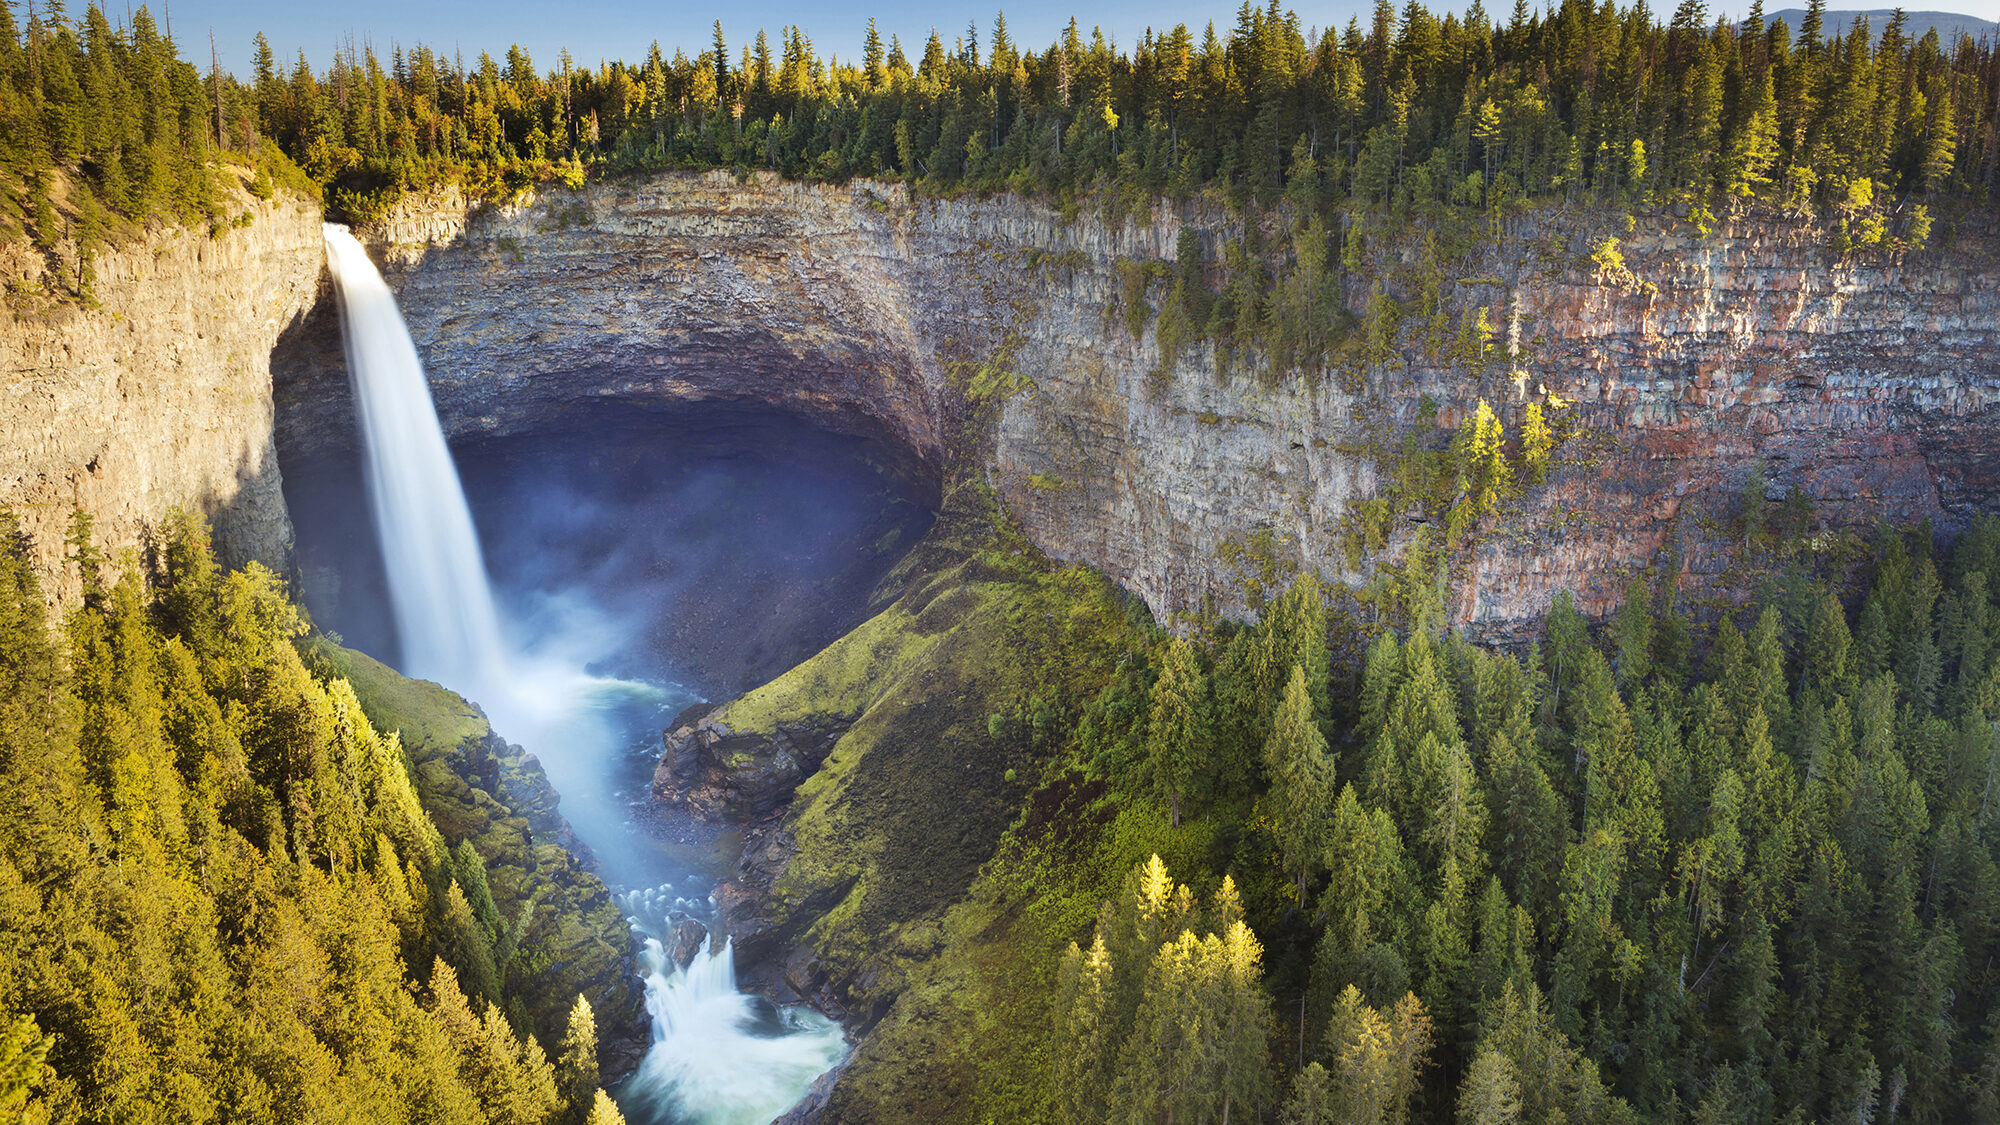 The Helmcken Falls in Wells Gray Provincial Park, Canada.